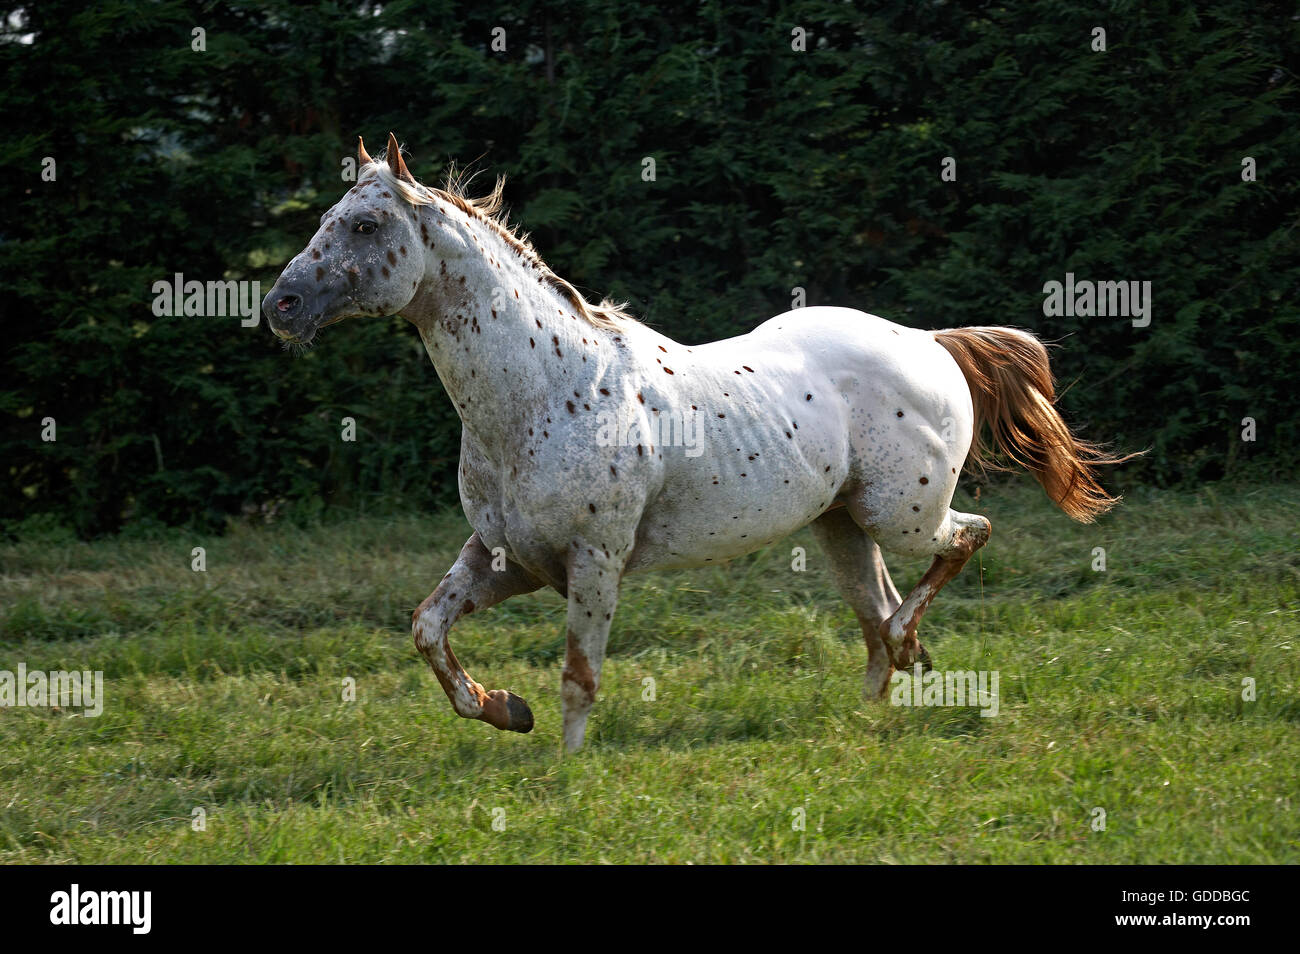 Appaloosa Horse, Adult Trotting in Paddock Stock Photo